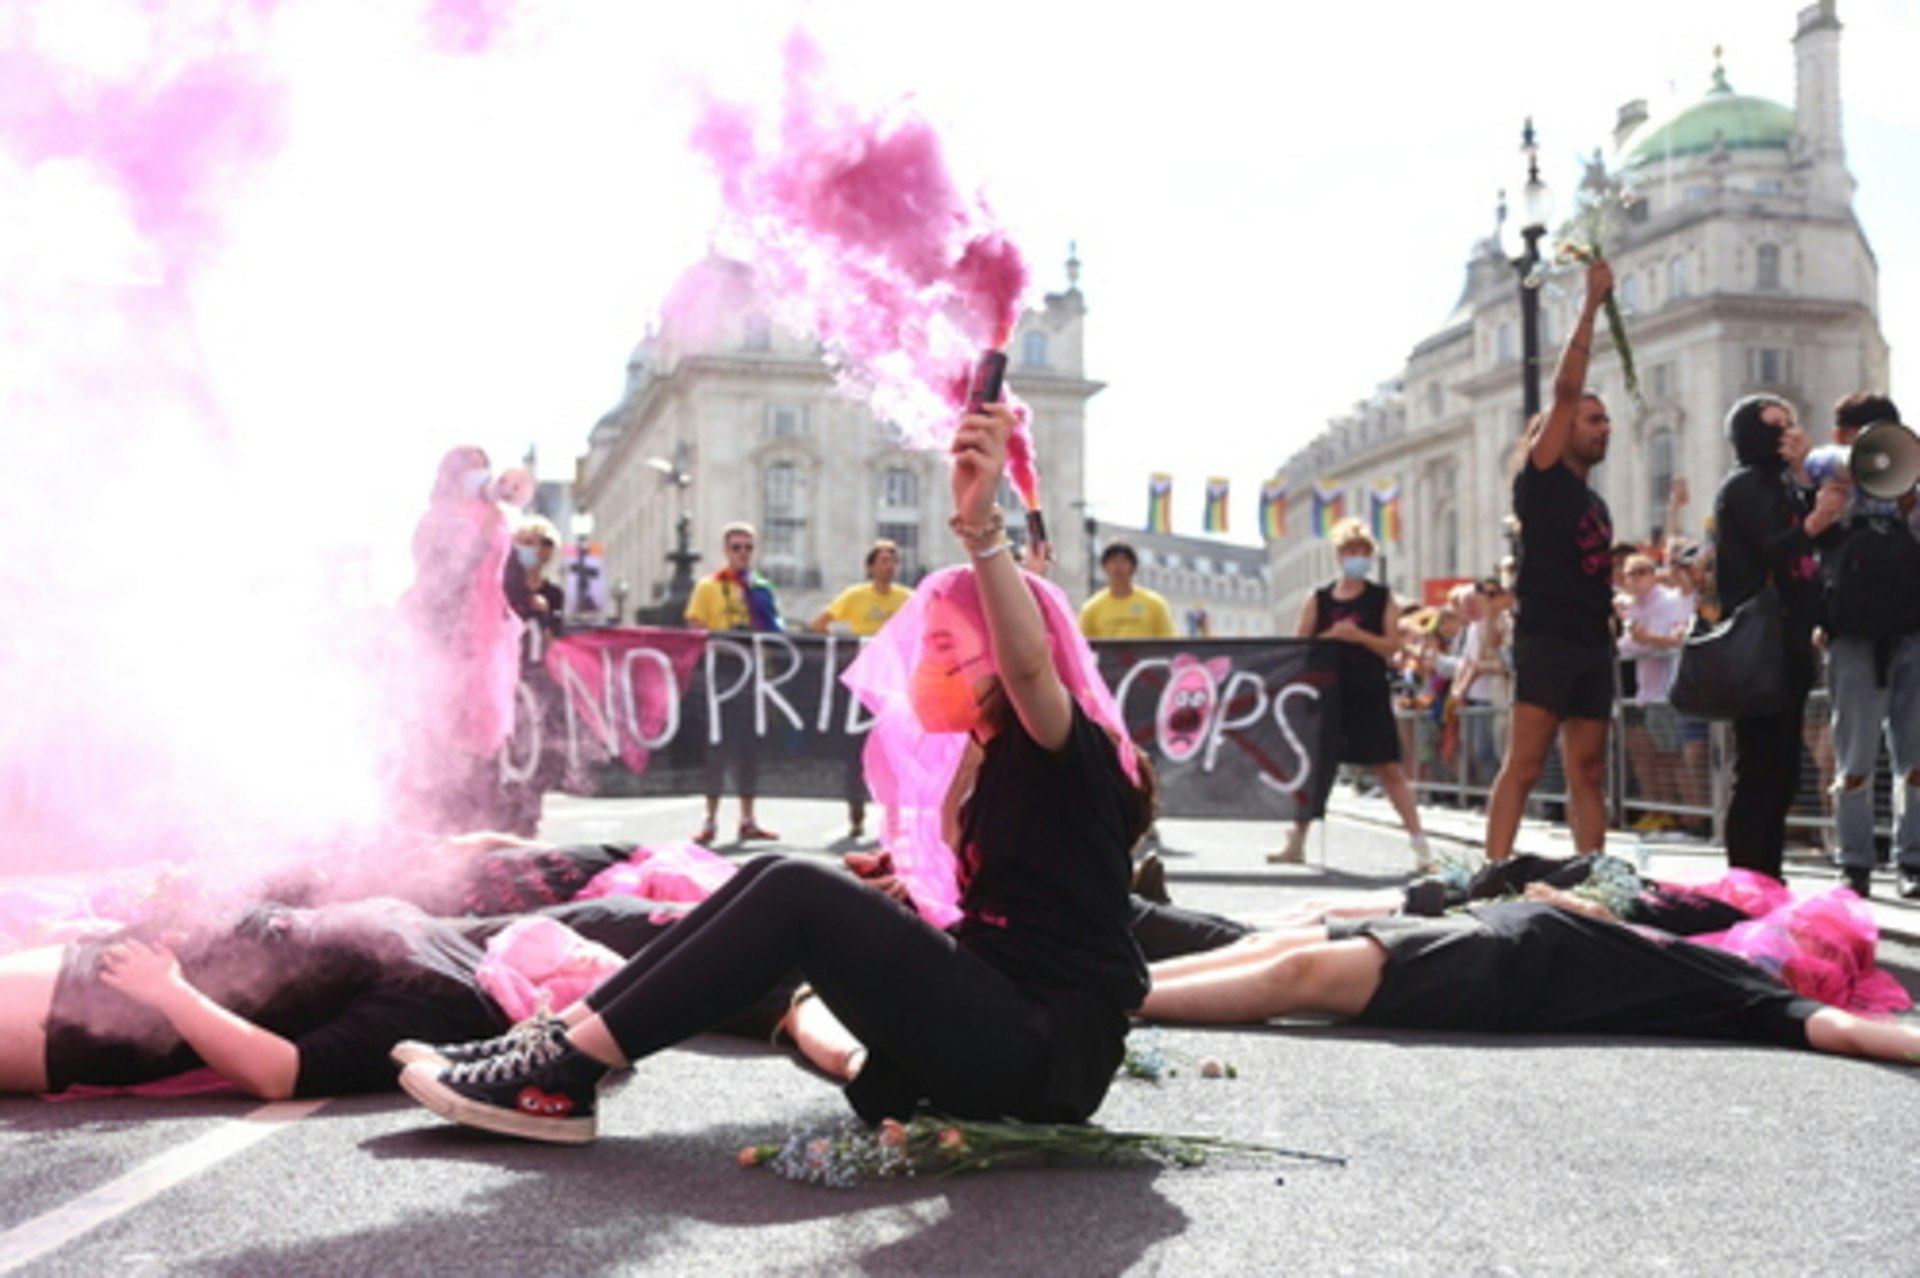 Anti-police protestors storm London Pride parade